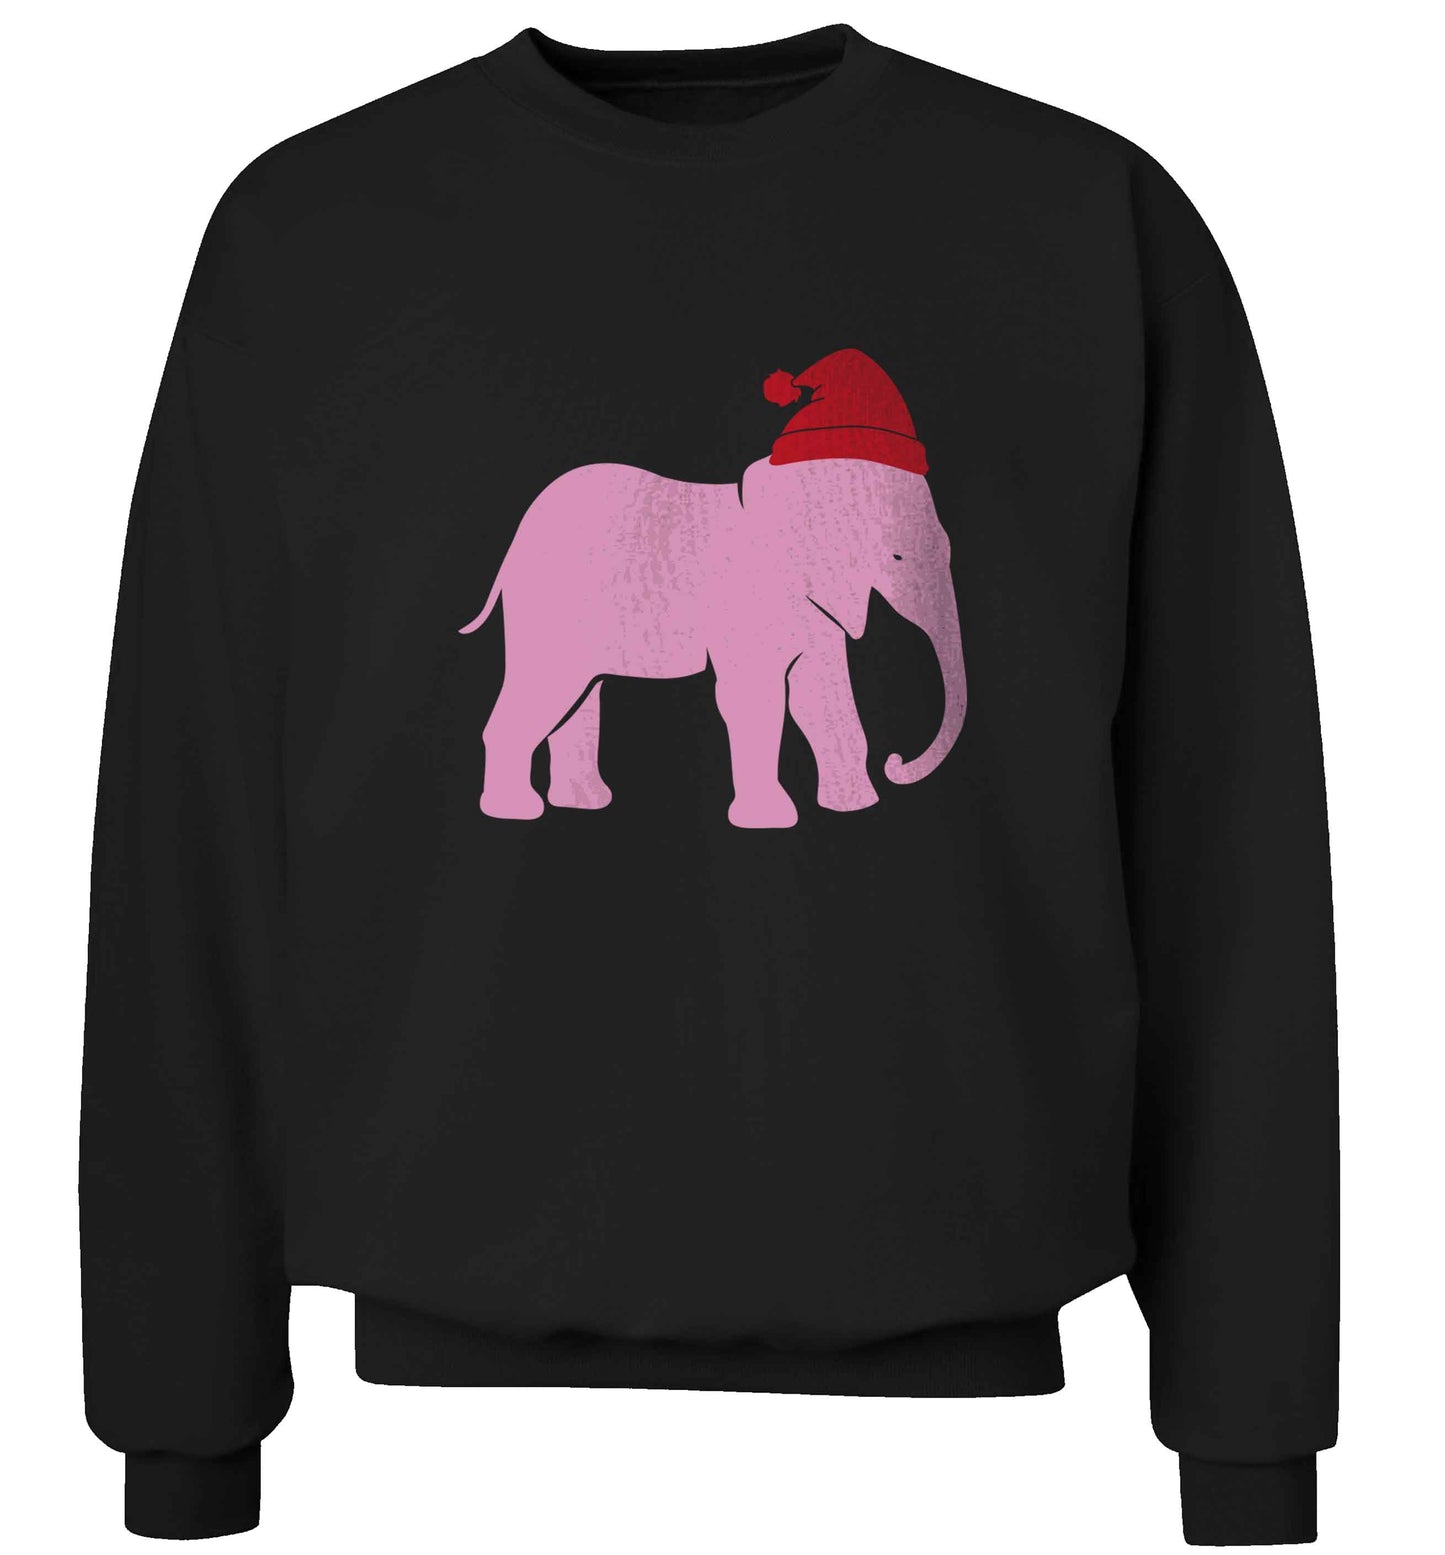 Pink elephant Santa adult's unisex black sweater 2XL